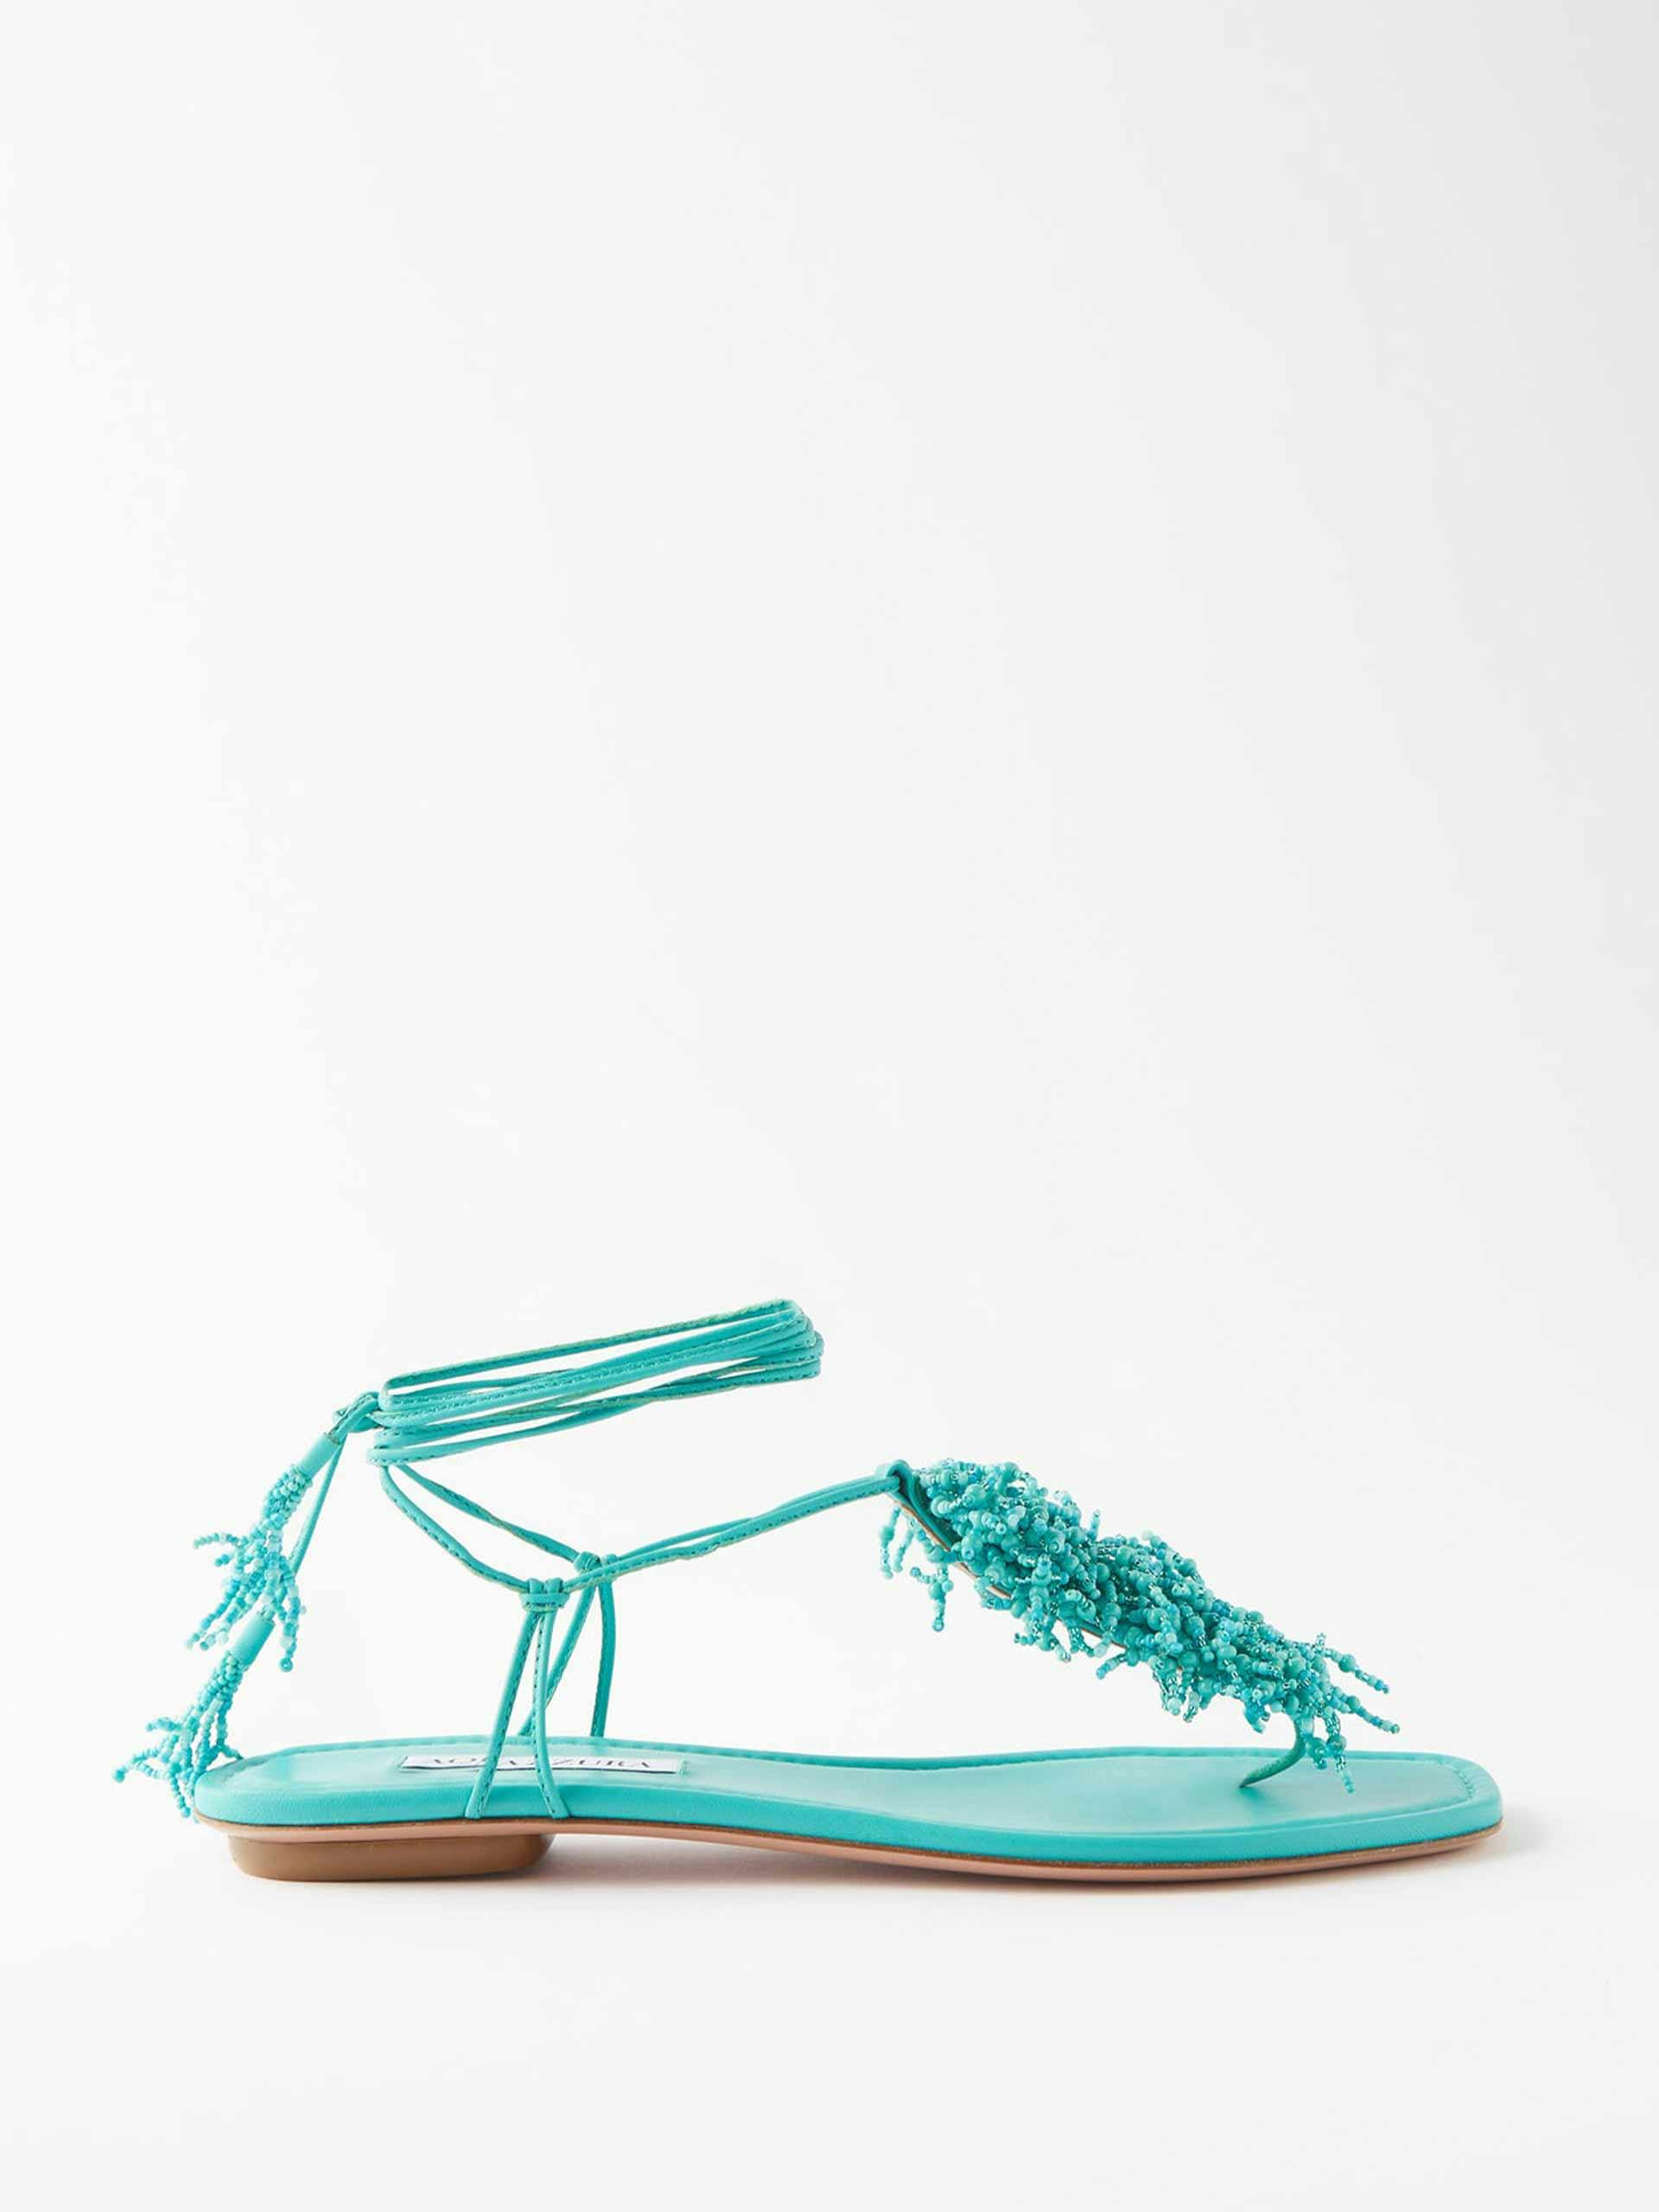 Turquoise flat sandals